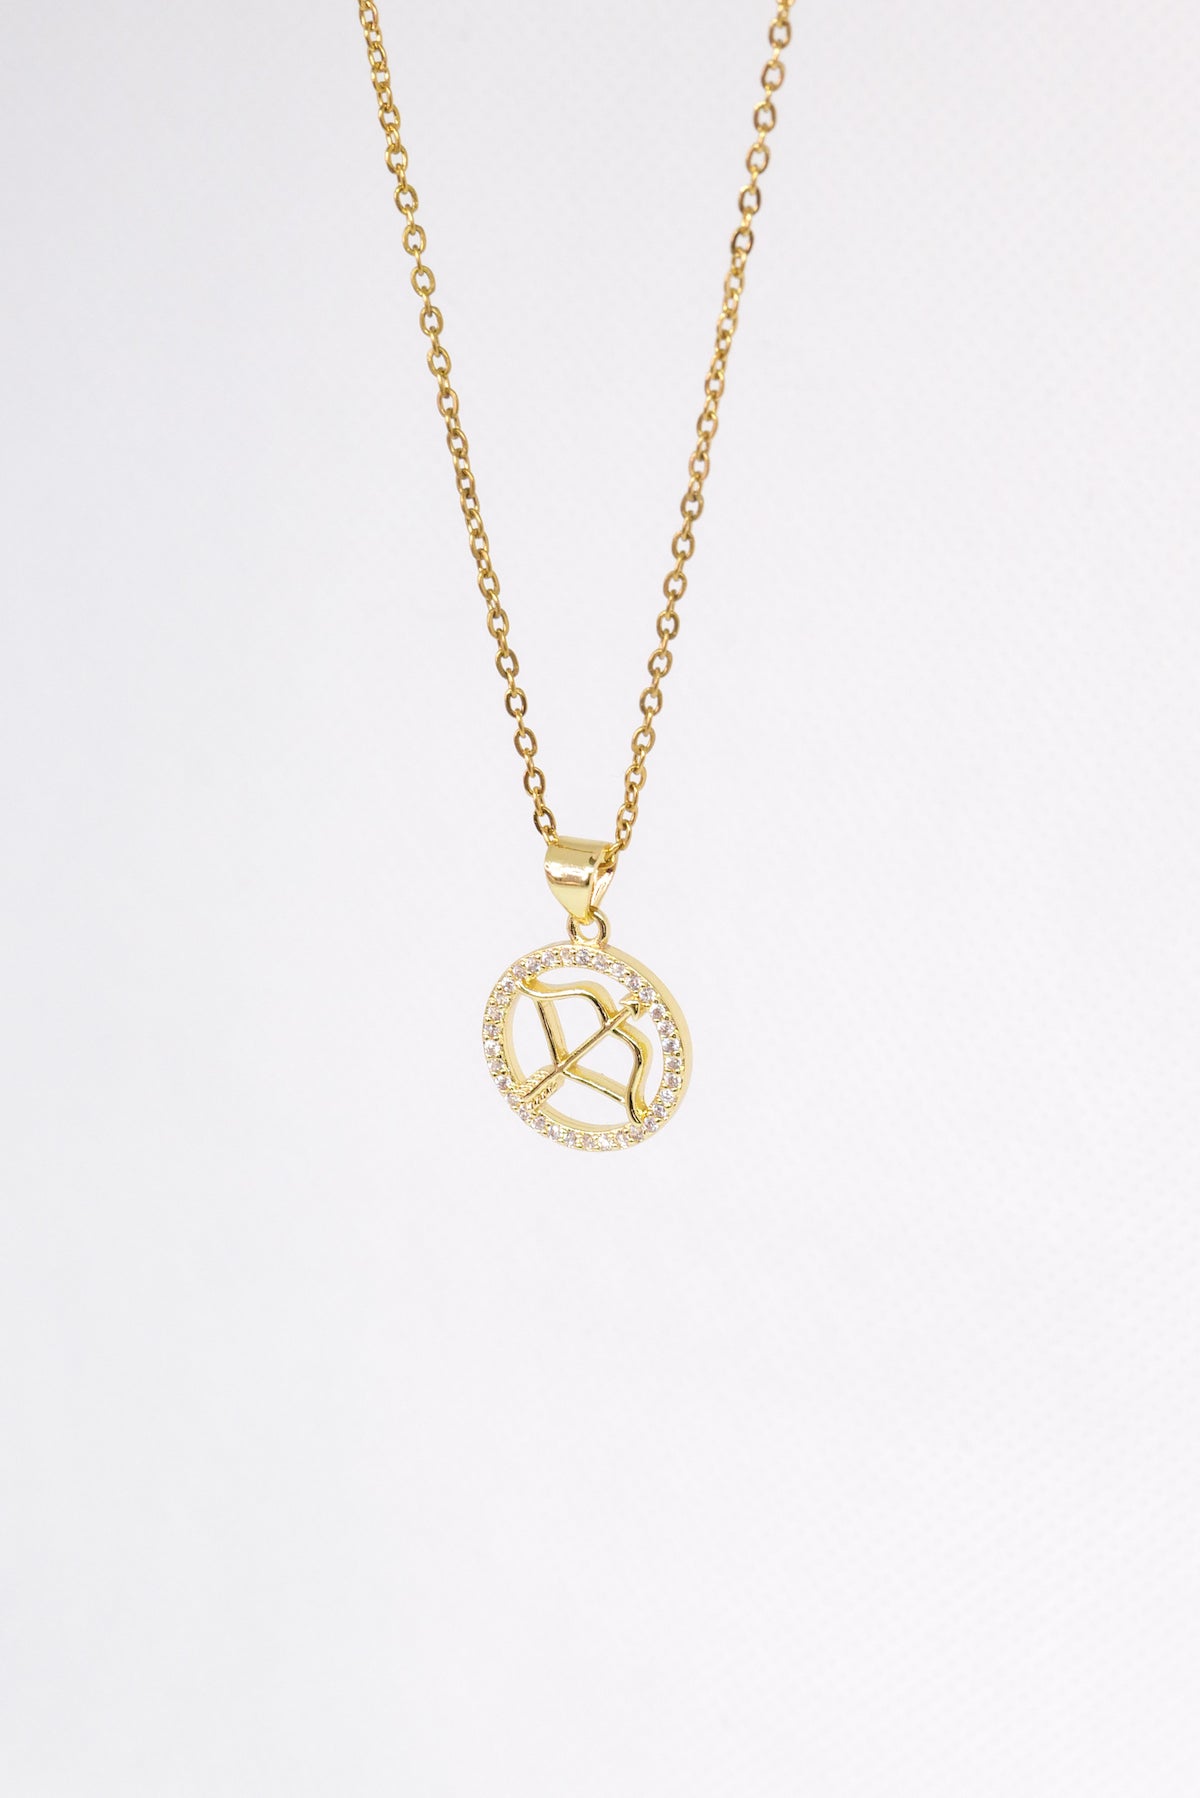 Sagittarius zodiac necklace